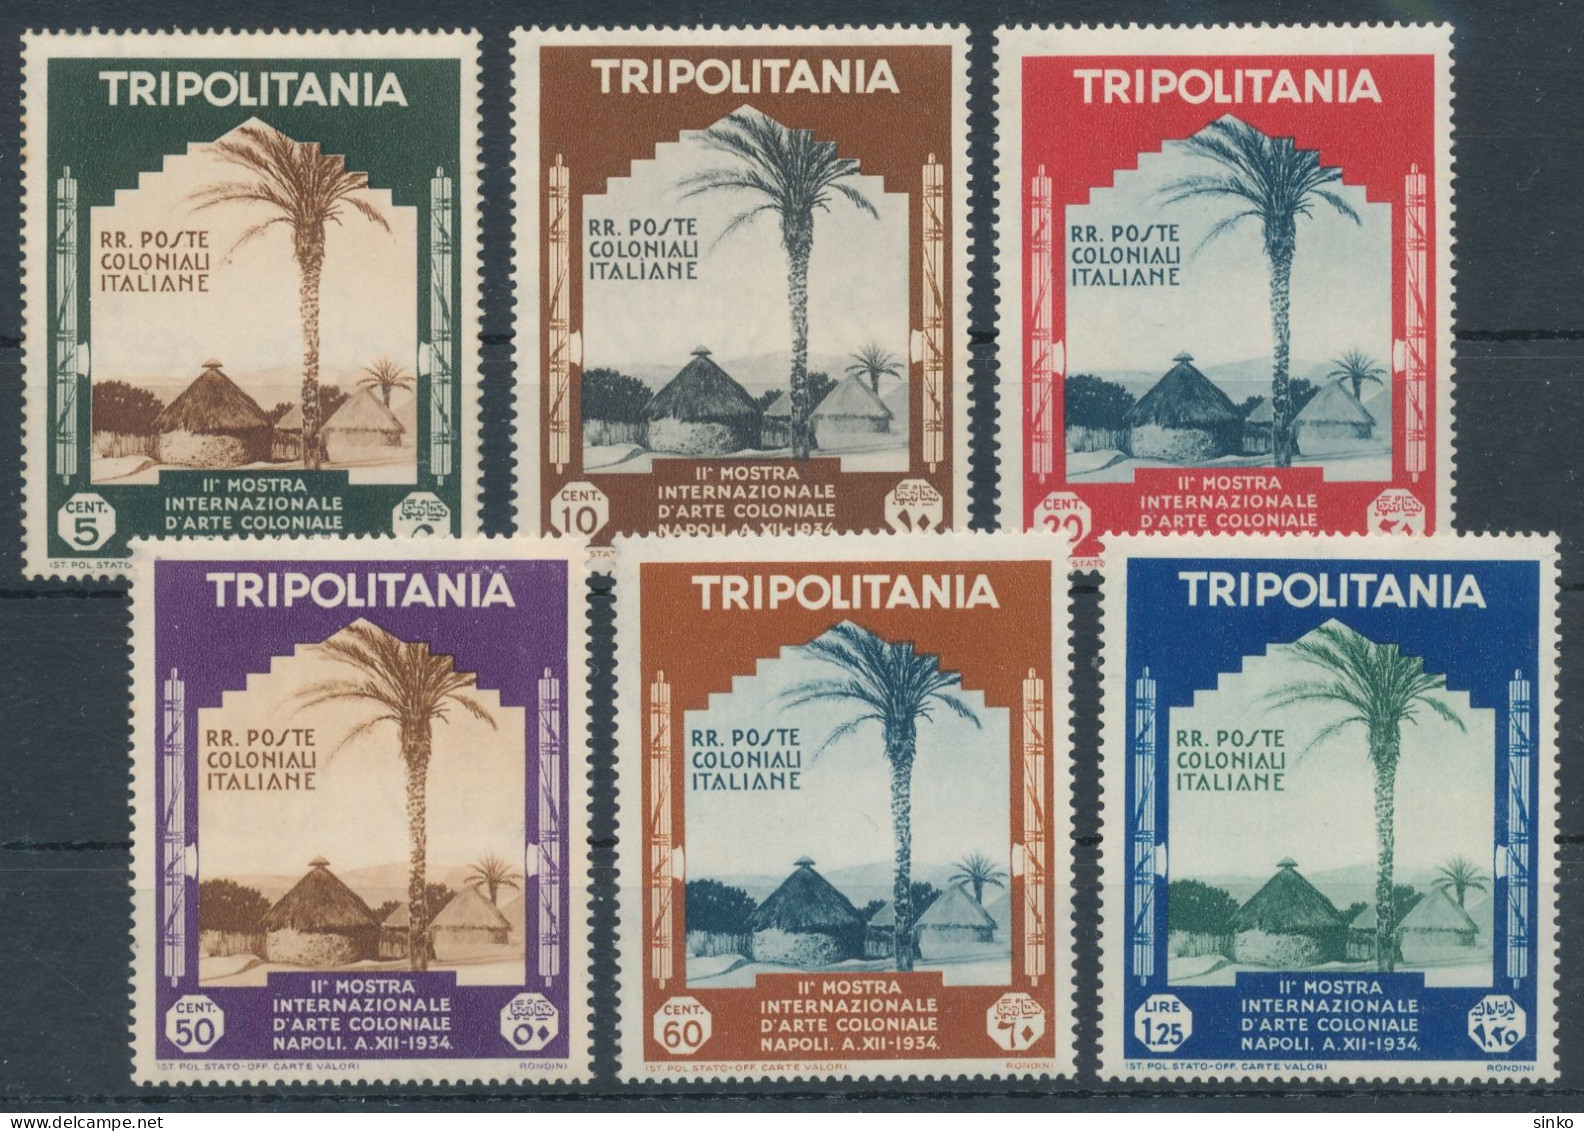 1934. Italian Tripolitania - Tripolitania